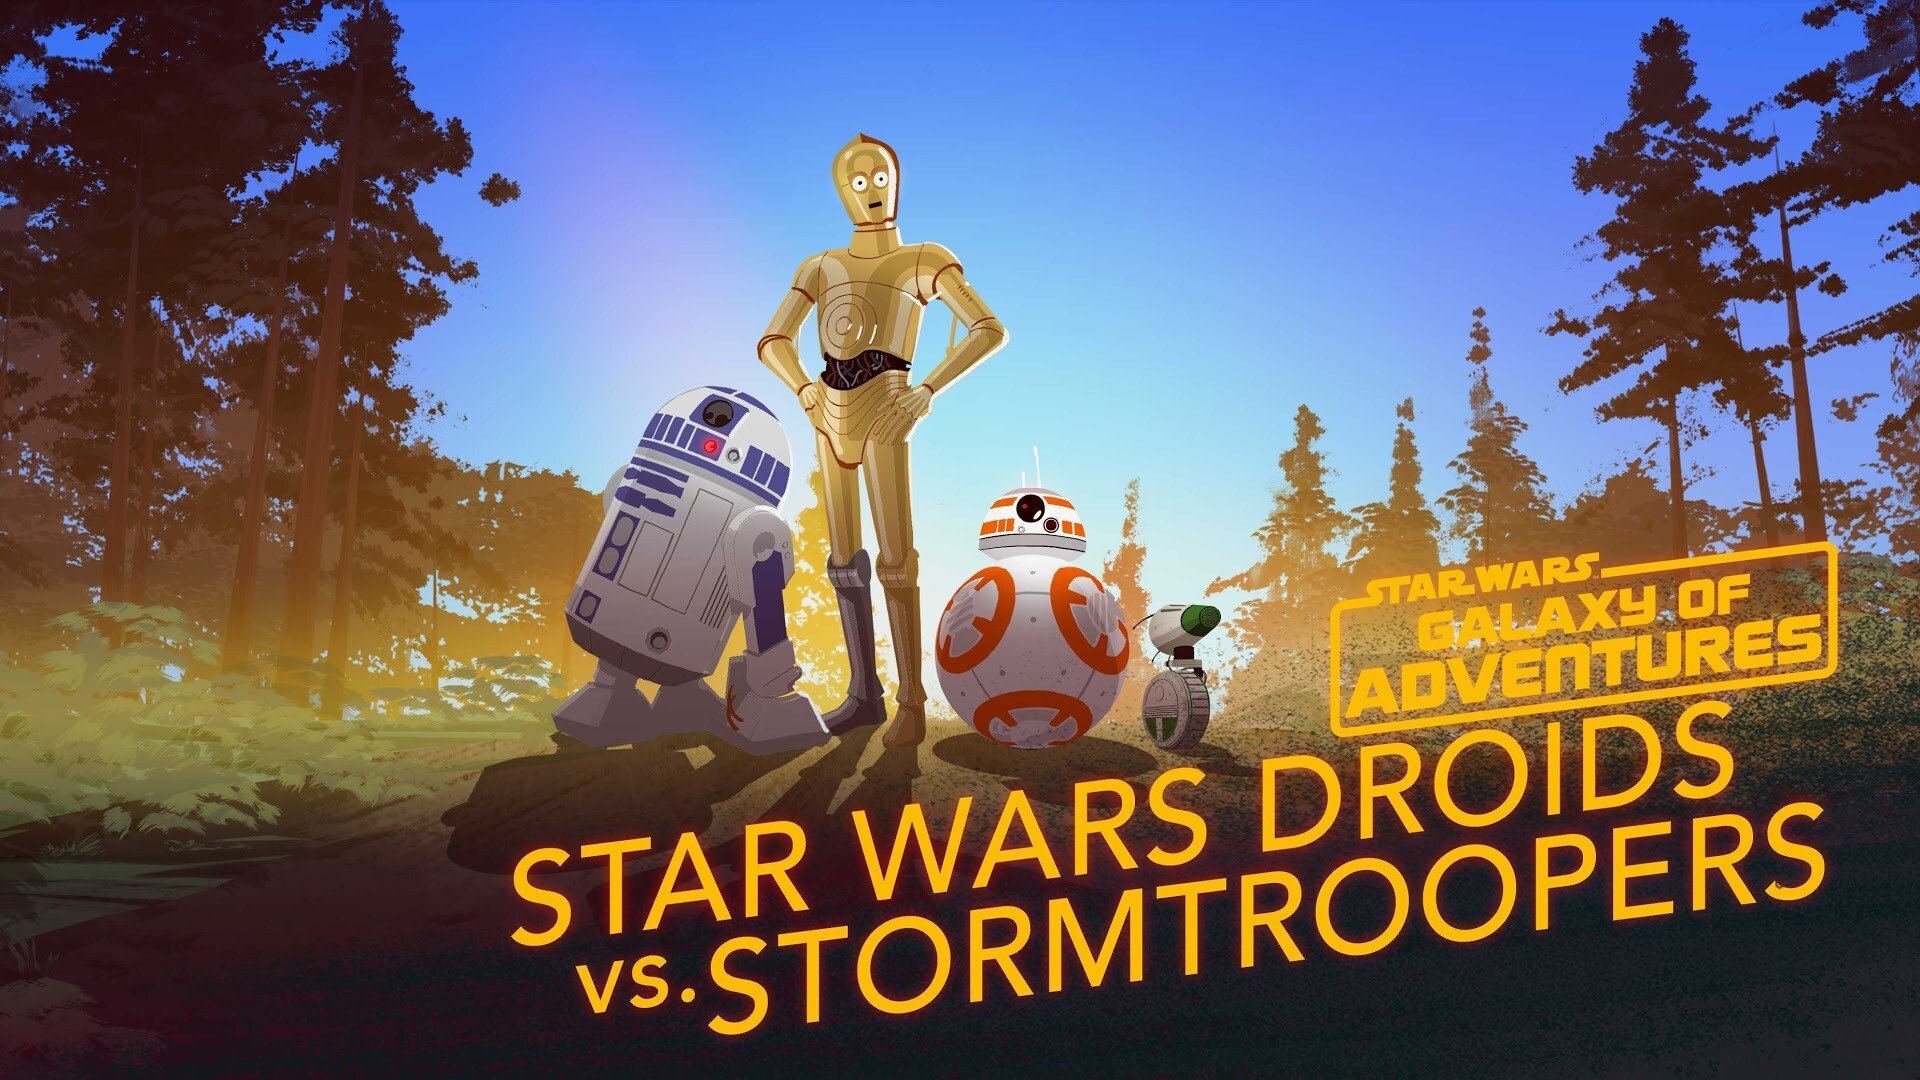 Star Wars Droids | Star Wars Galaxy of Adventures